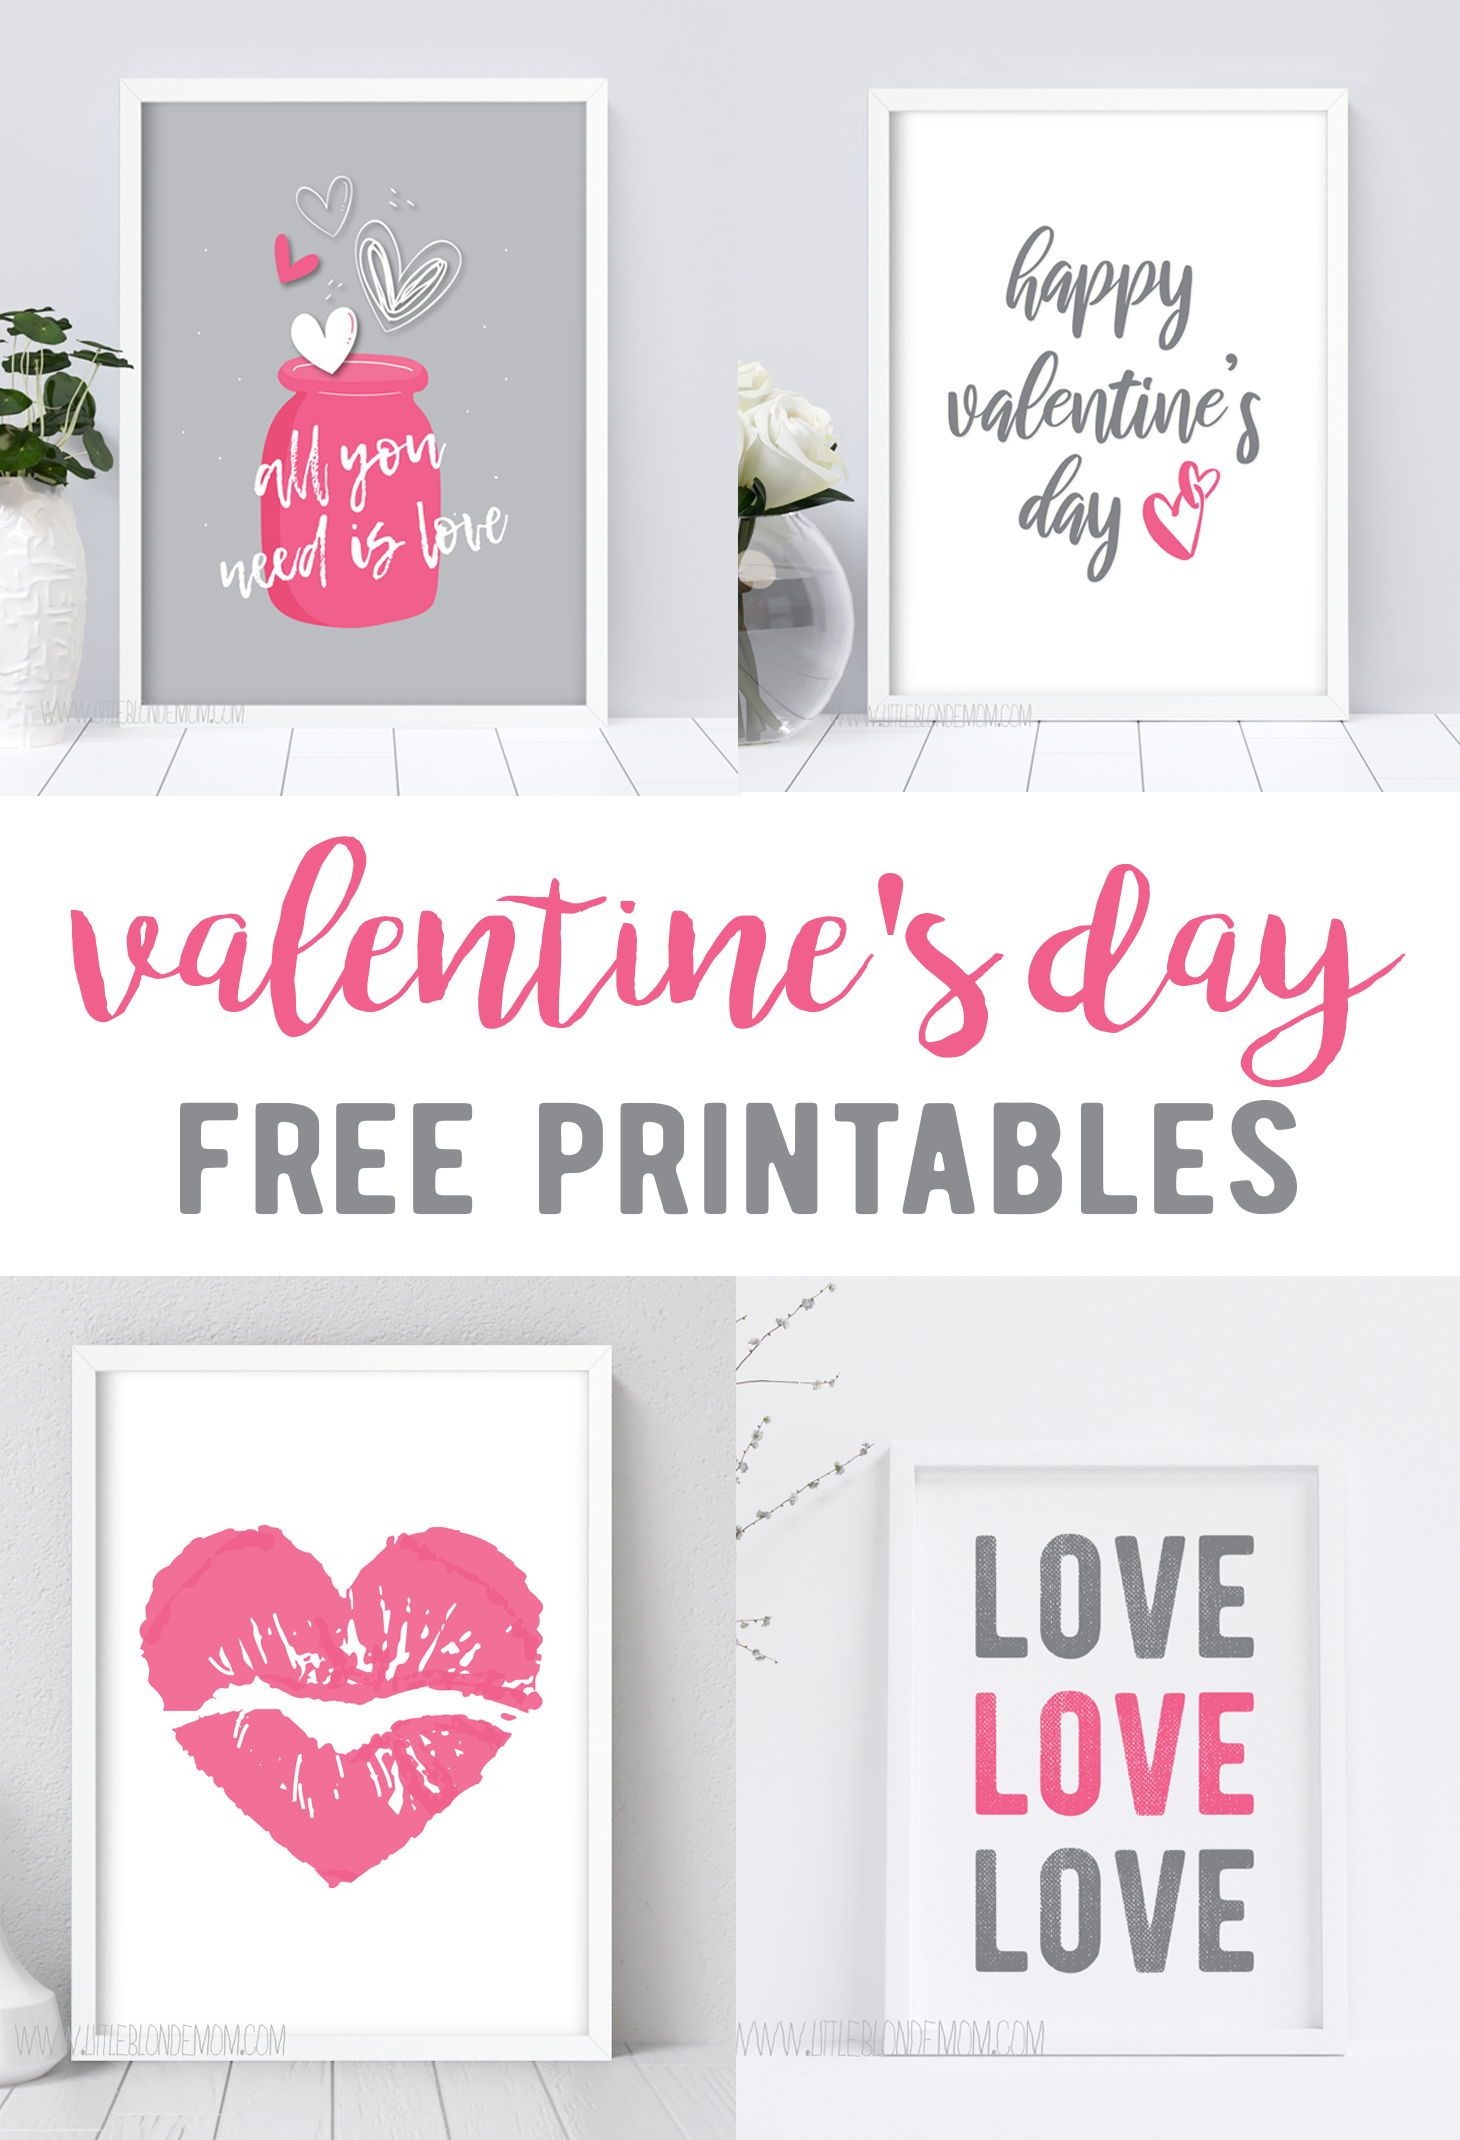 Free Valentine's Day Printables | Little Blonde Mom Blog - Free Printable Valentine's Day Decorations